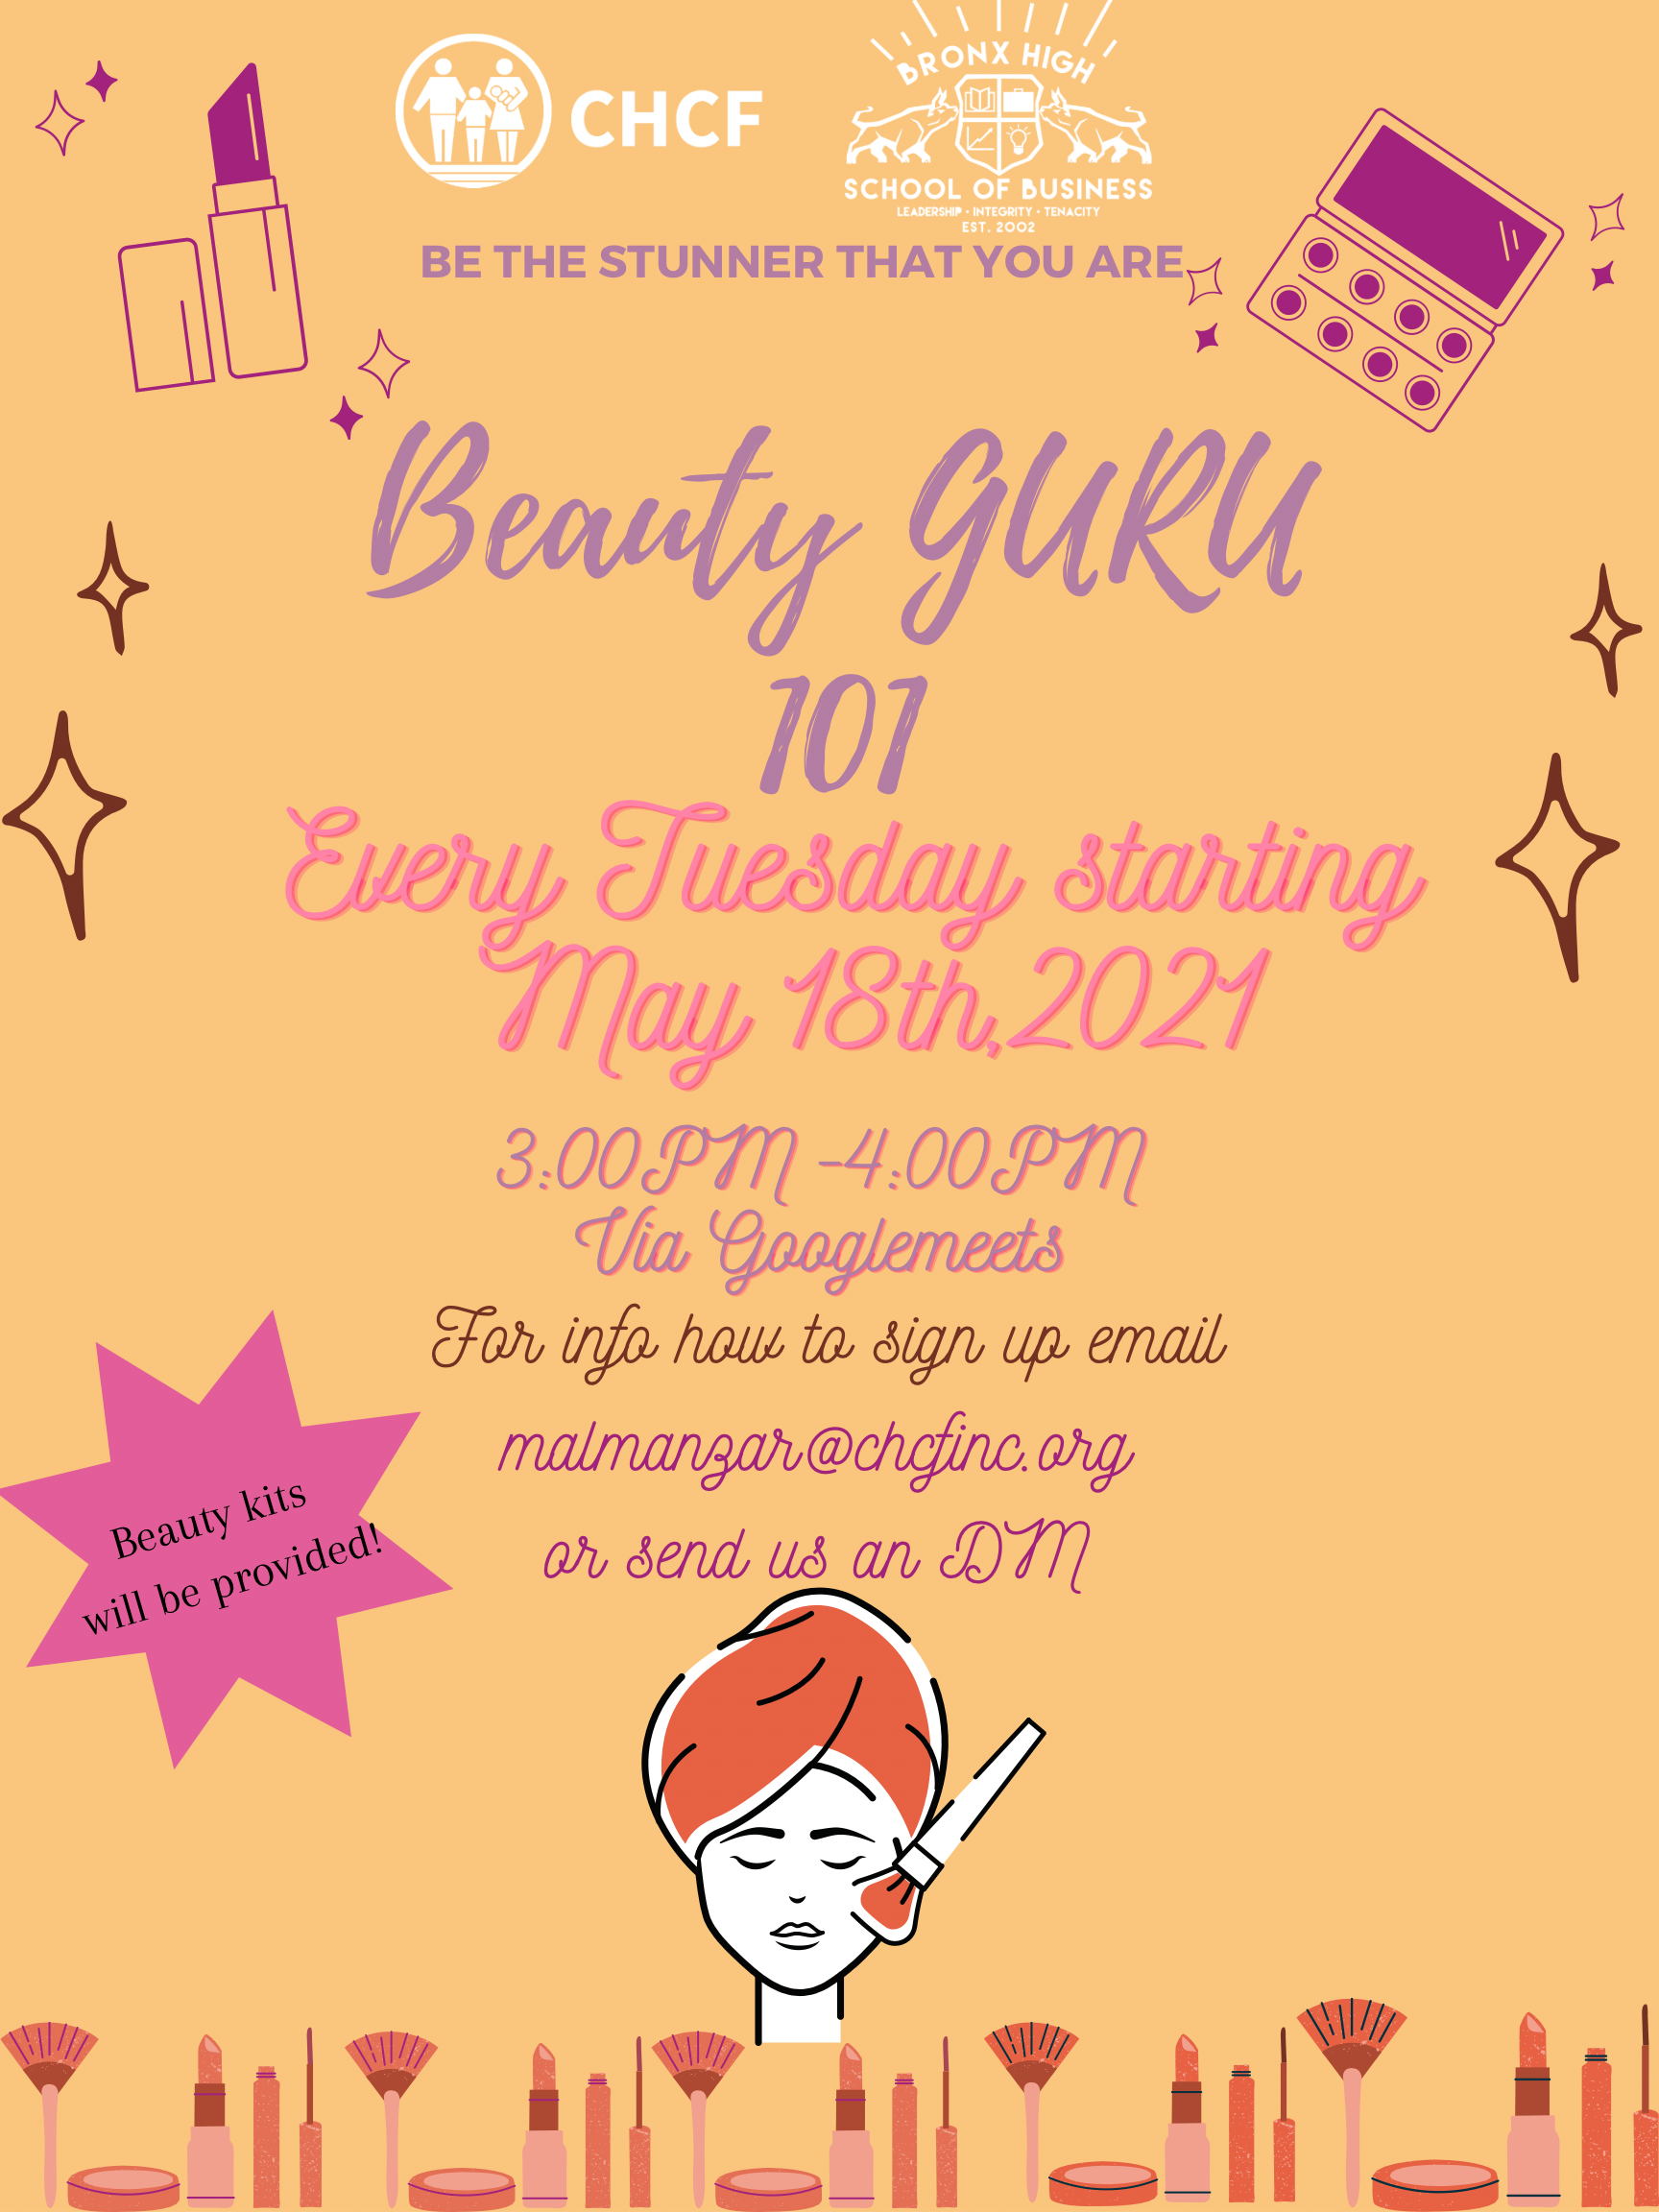 Join beauty guru classes